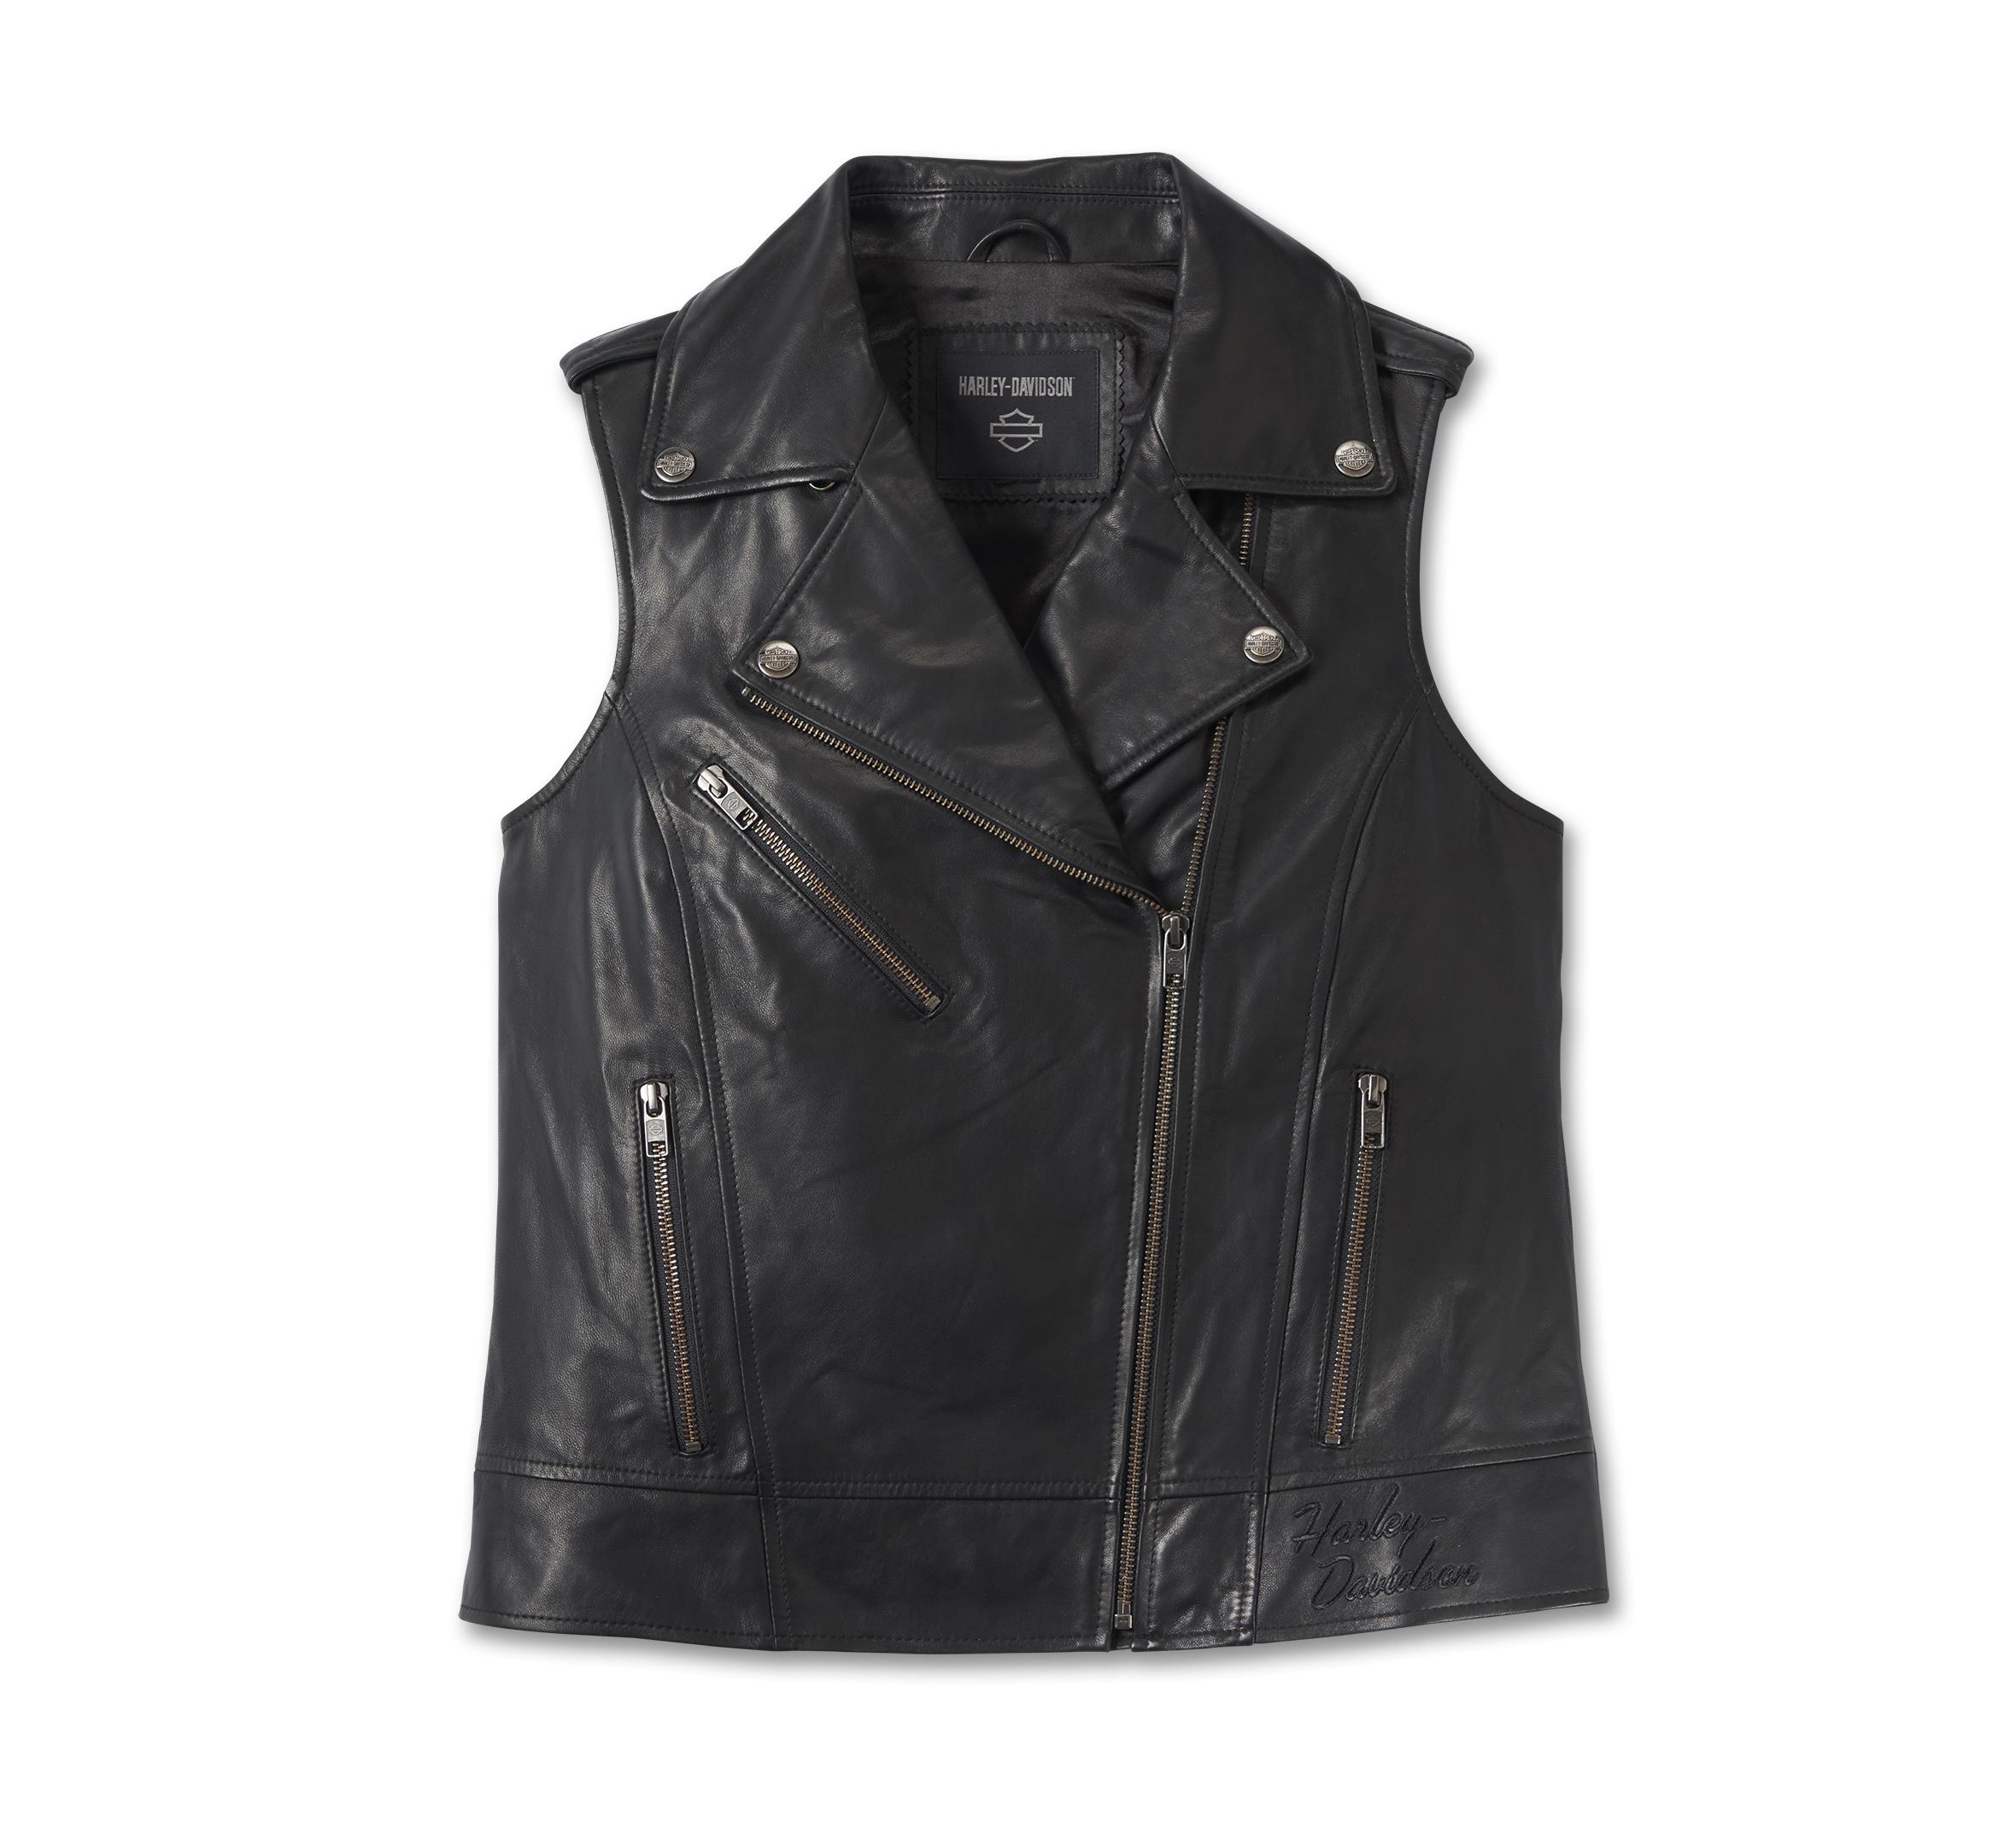 Harley-Davidson Women's Eclipse Leather Vest, Black - Medium